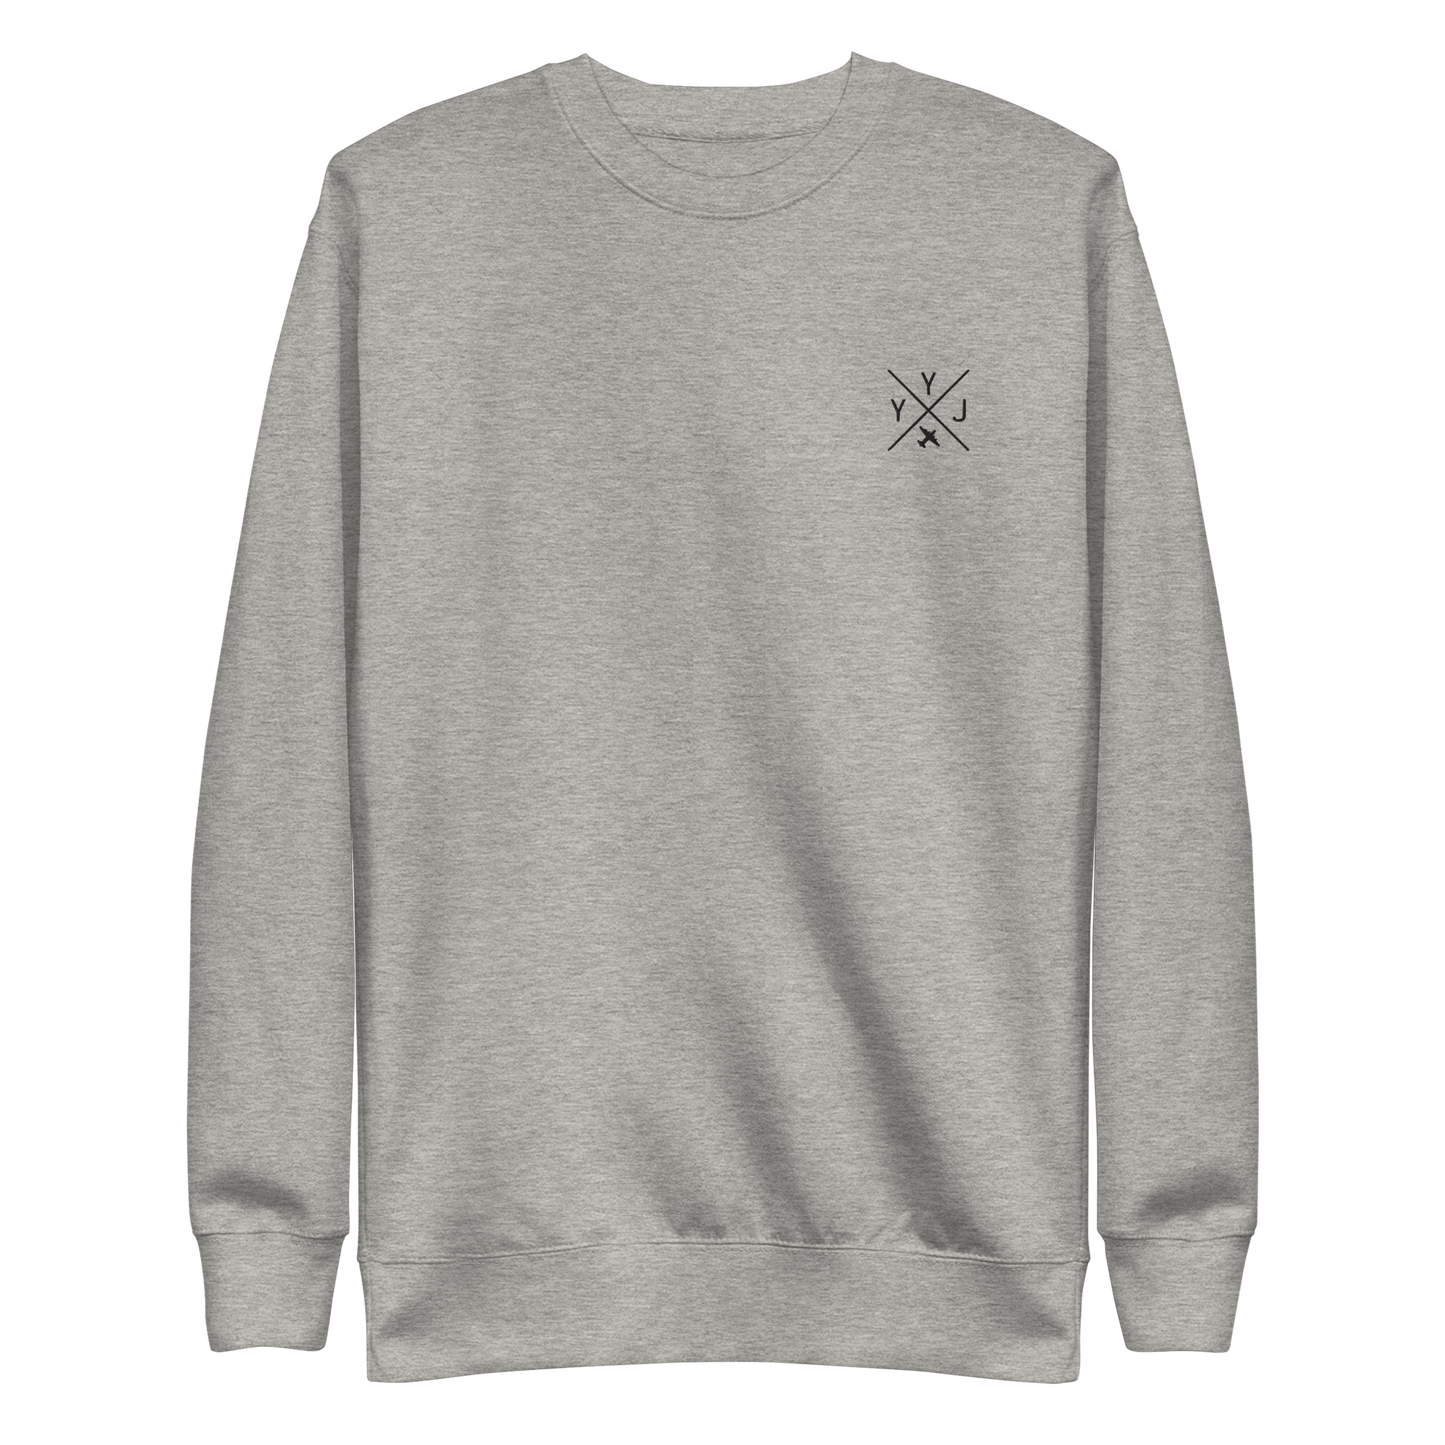 YHM Designs - YYJ Victoria Premium Sweatshirt - Crossed-X Design with Airport Code and Vintage Propliner - Black Embroidery - Image 02